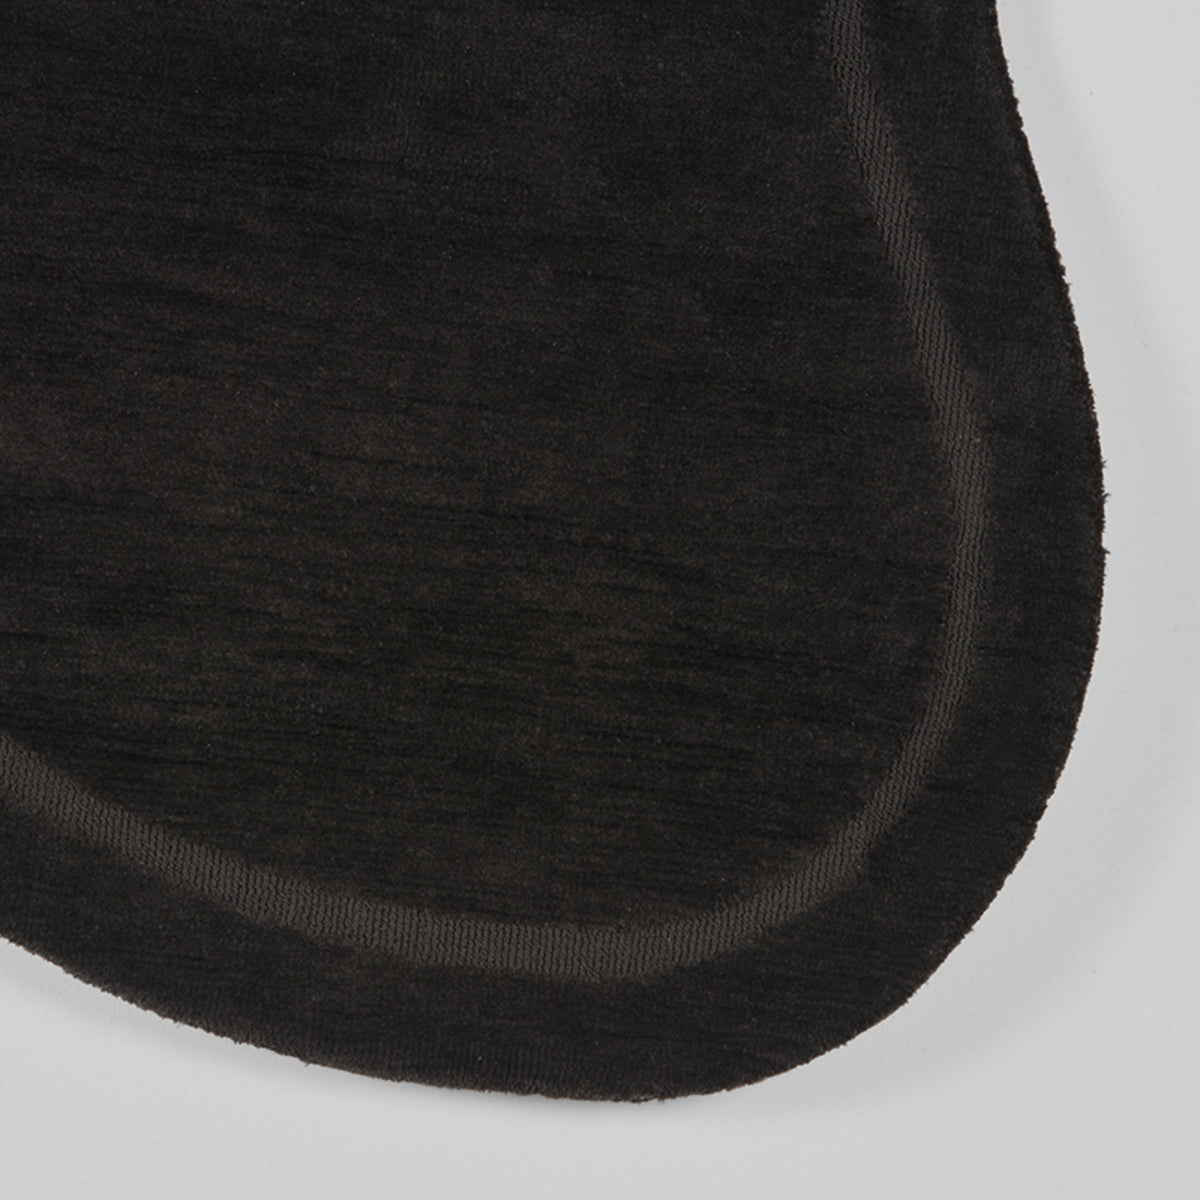 LABEL51 Vloerkleden Mody - Zwart - Synthetisch - 160x230 cm